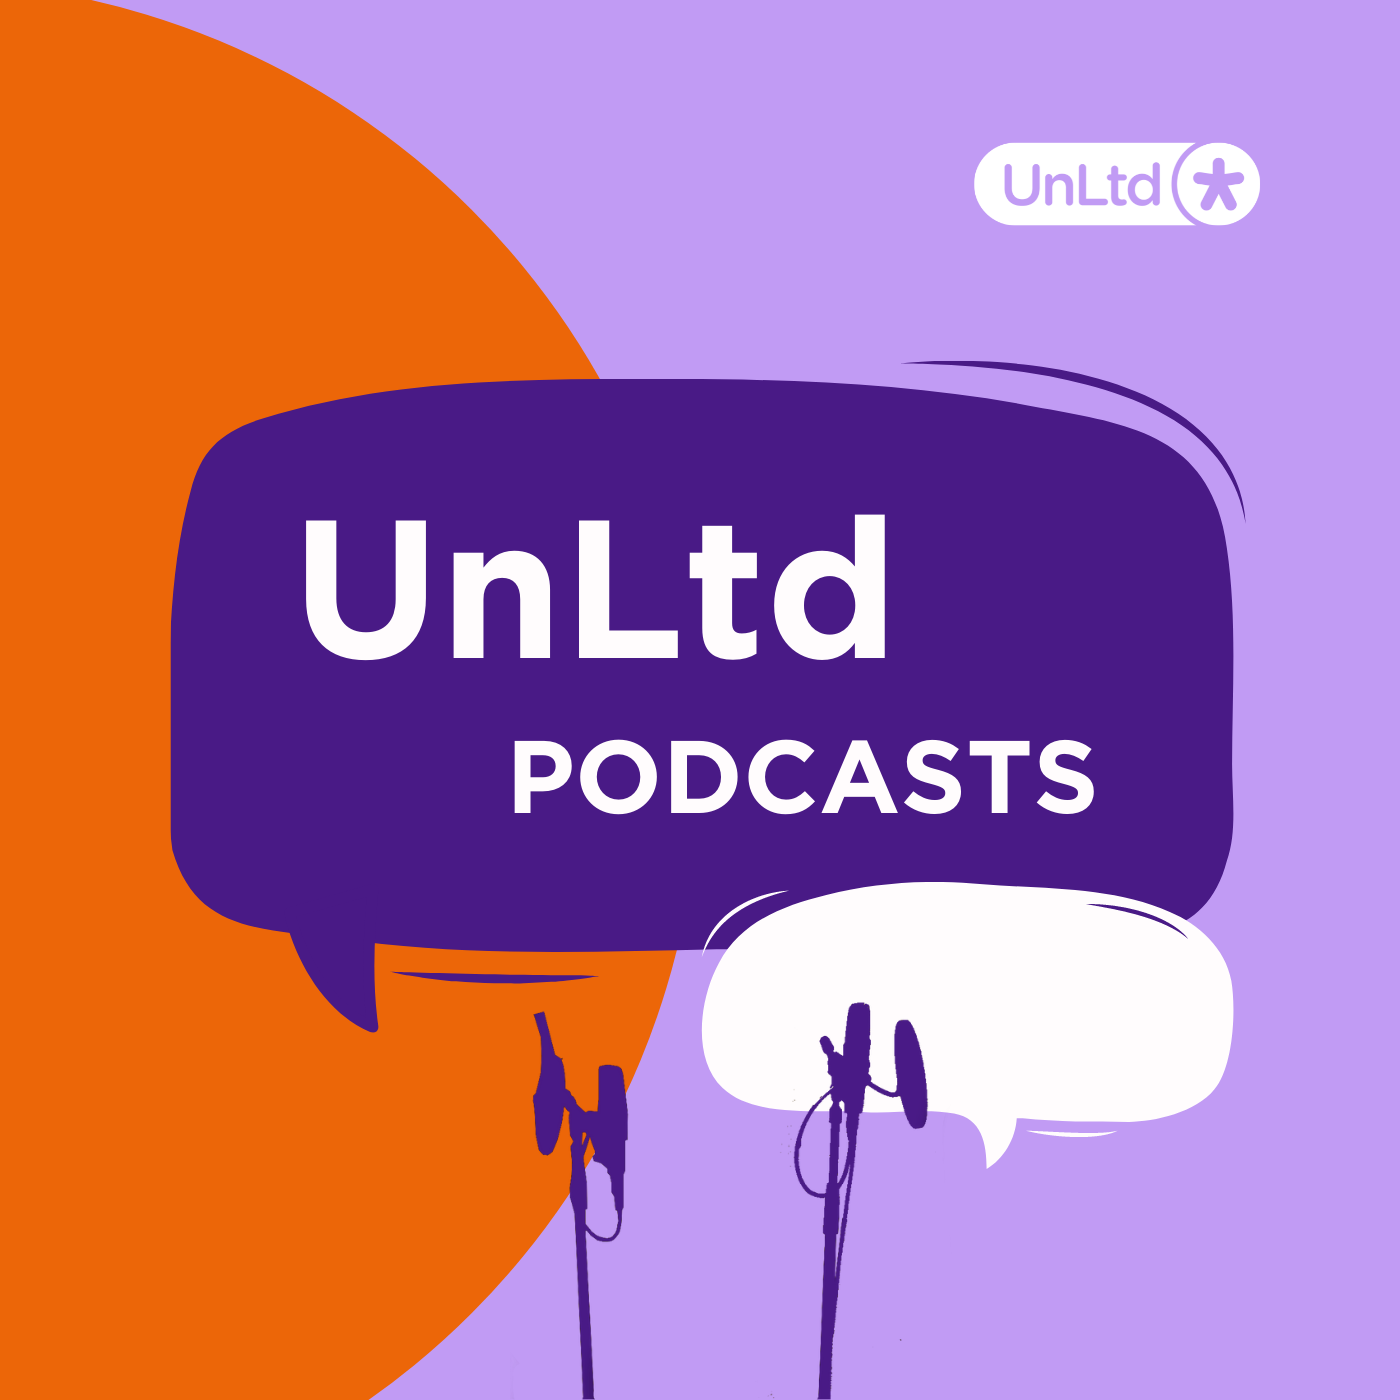 UnLtd Podcasts